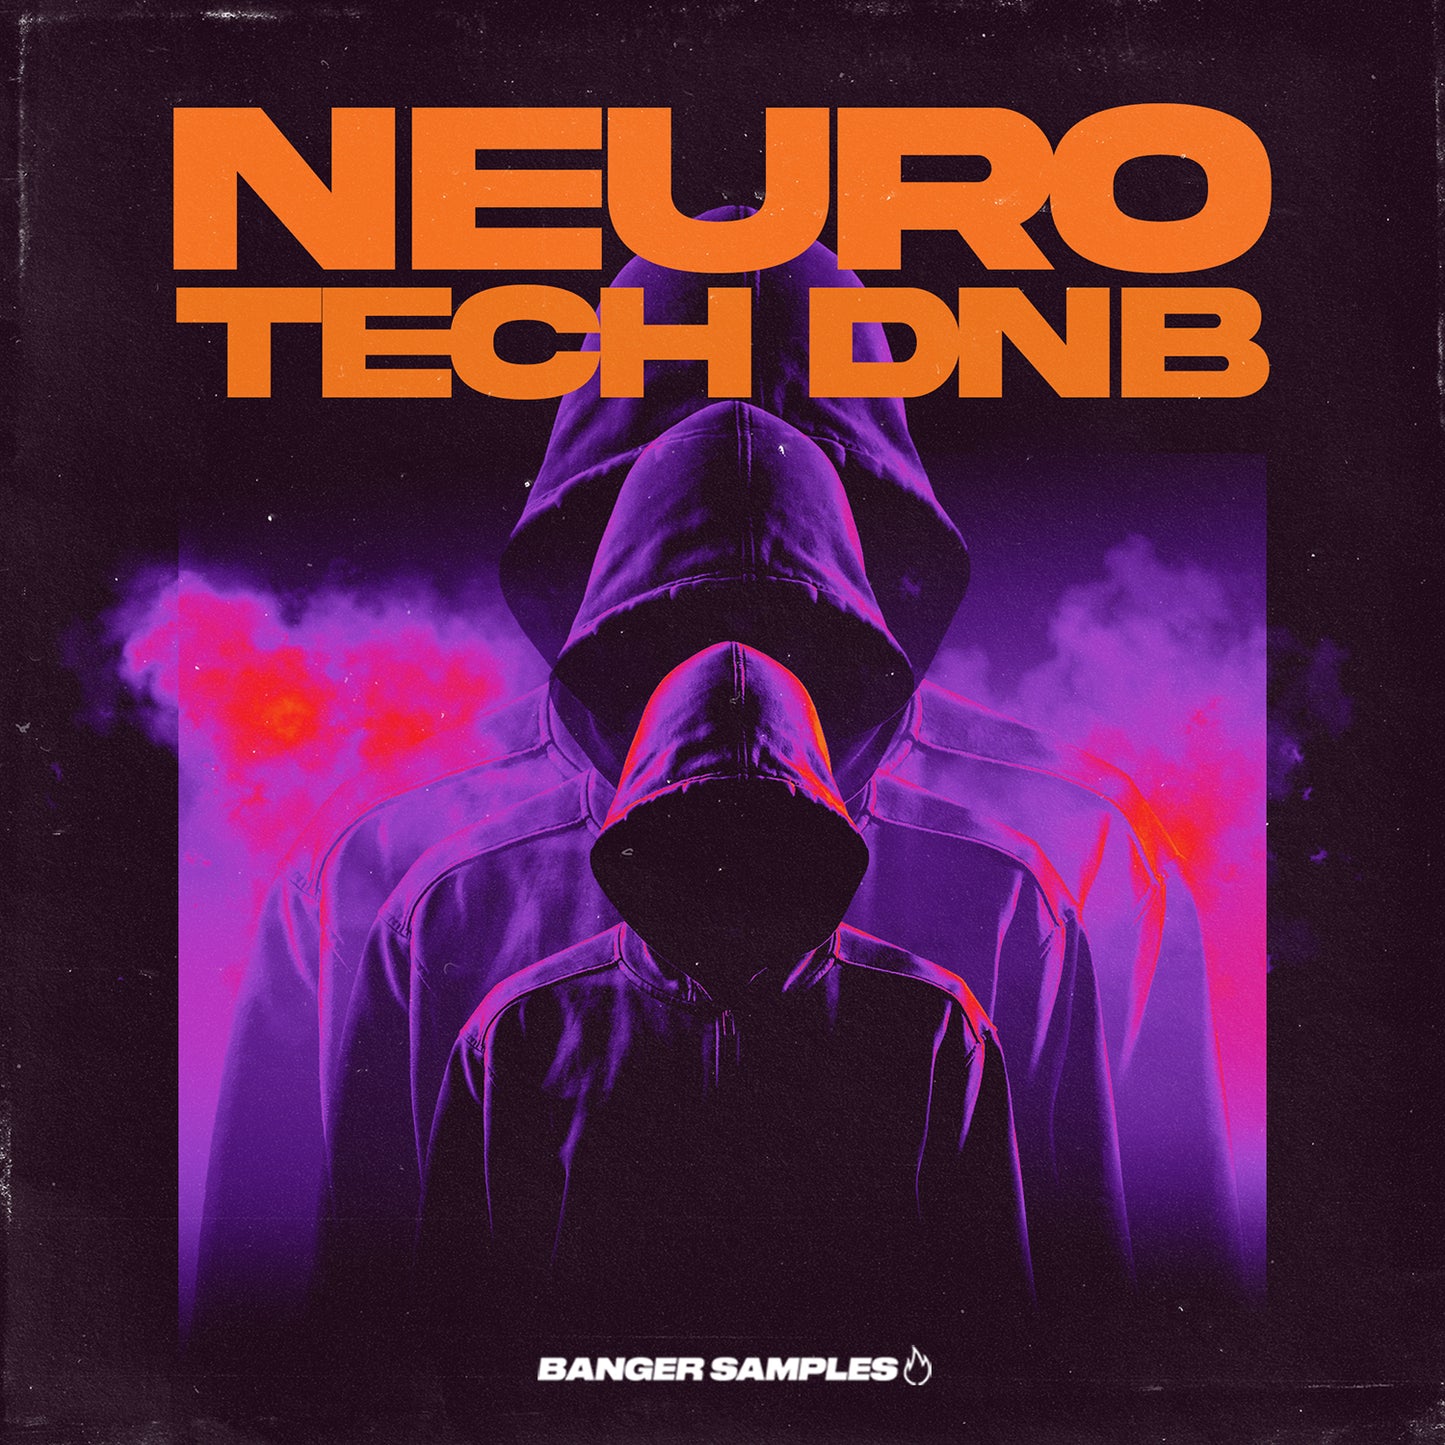 Neuro Tech DnB